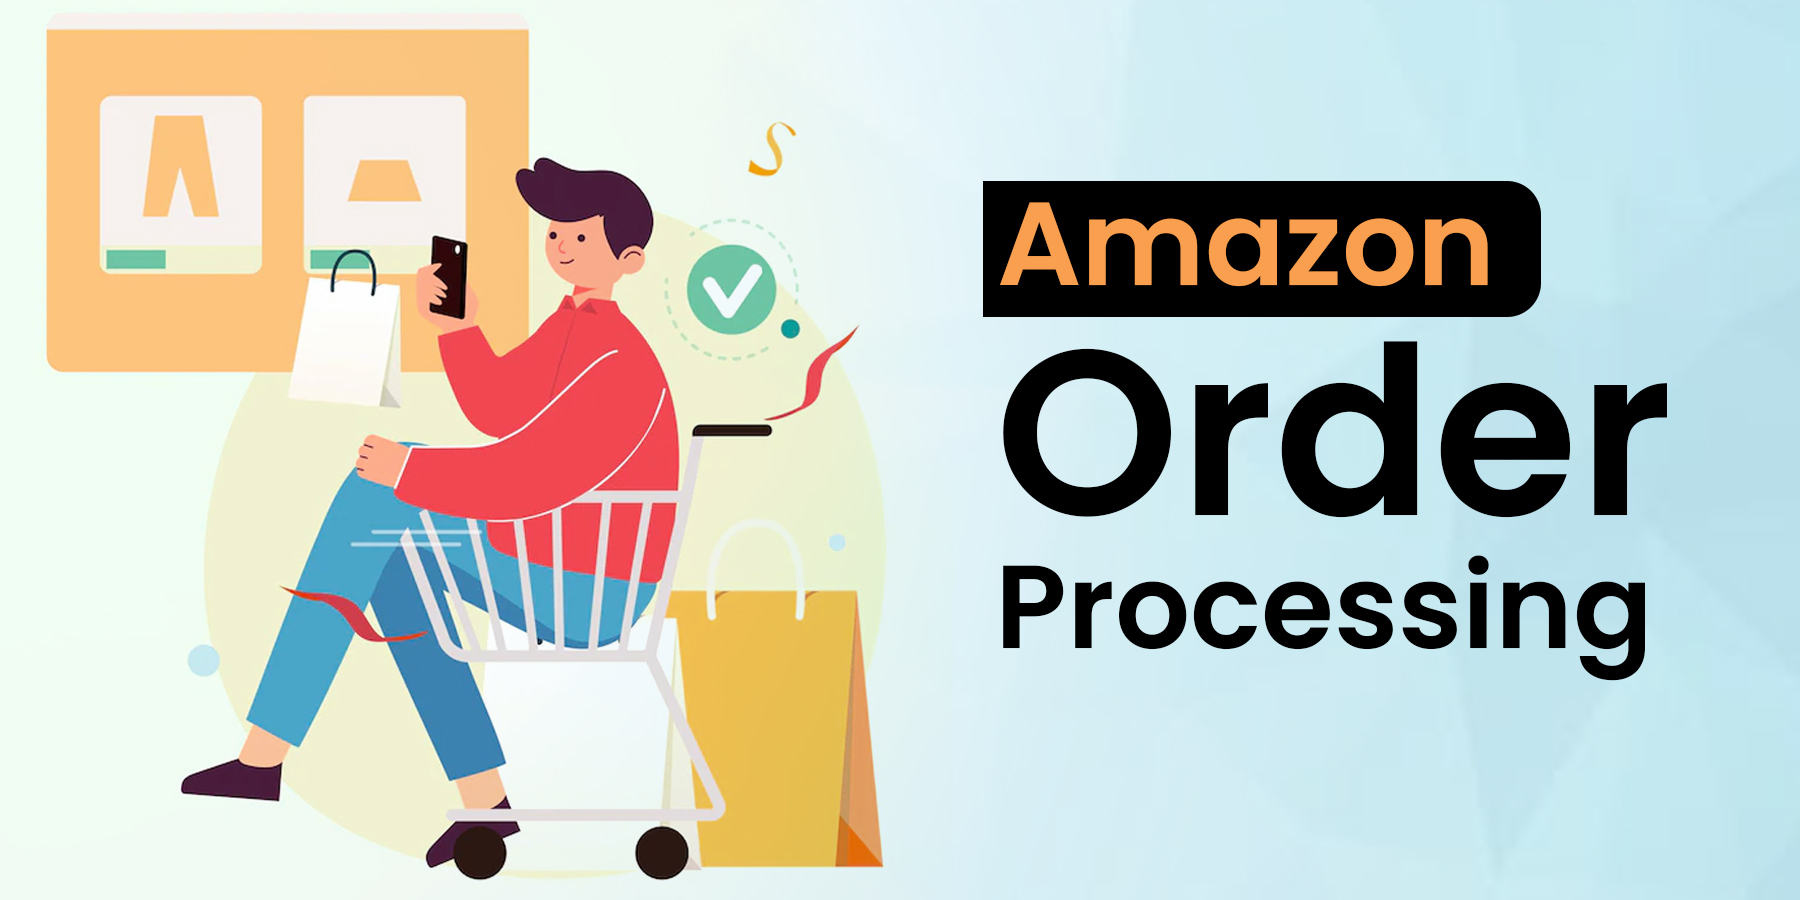 Amazon Order Processing